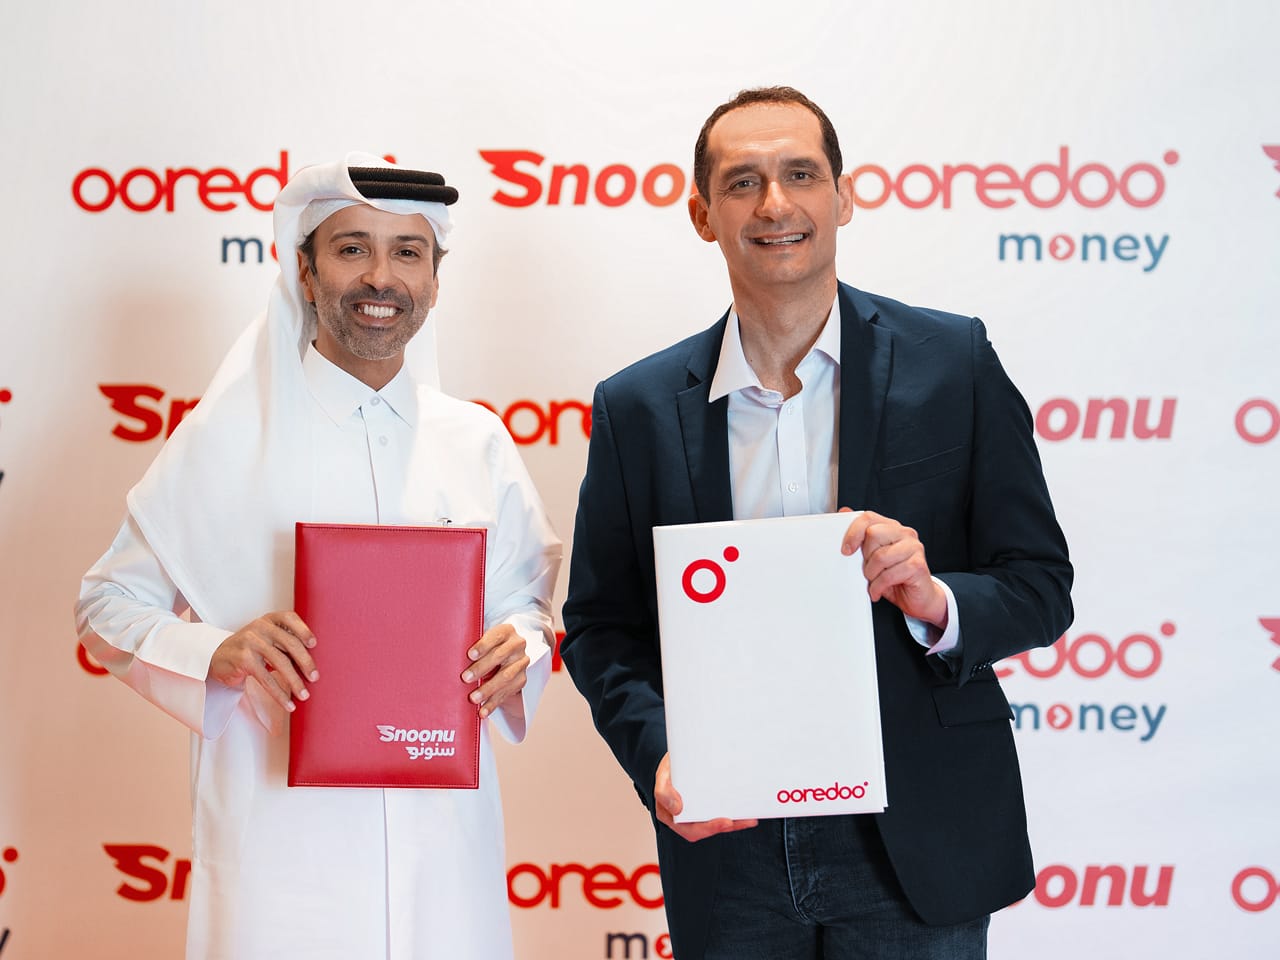 Snoonu, the fastest-growing Qatari tech company, announces a partnership with Ooredoo Money